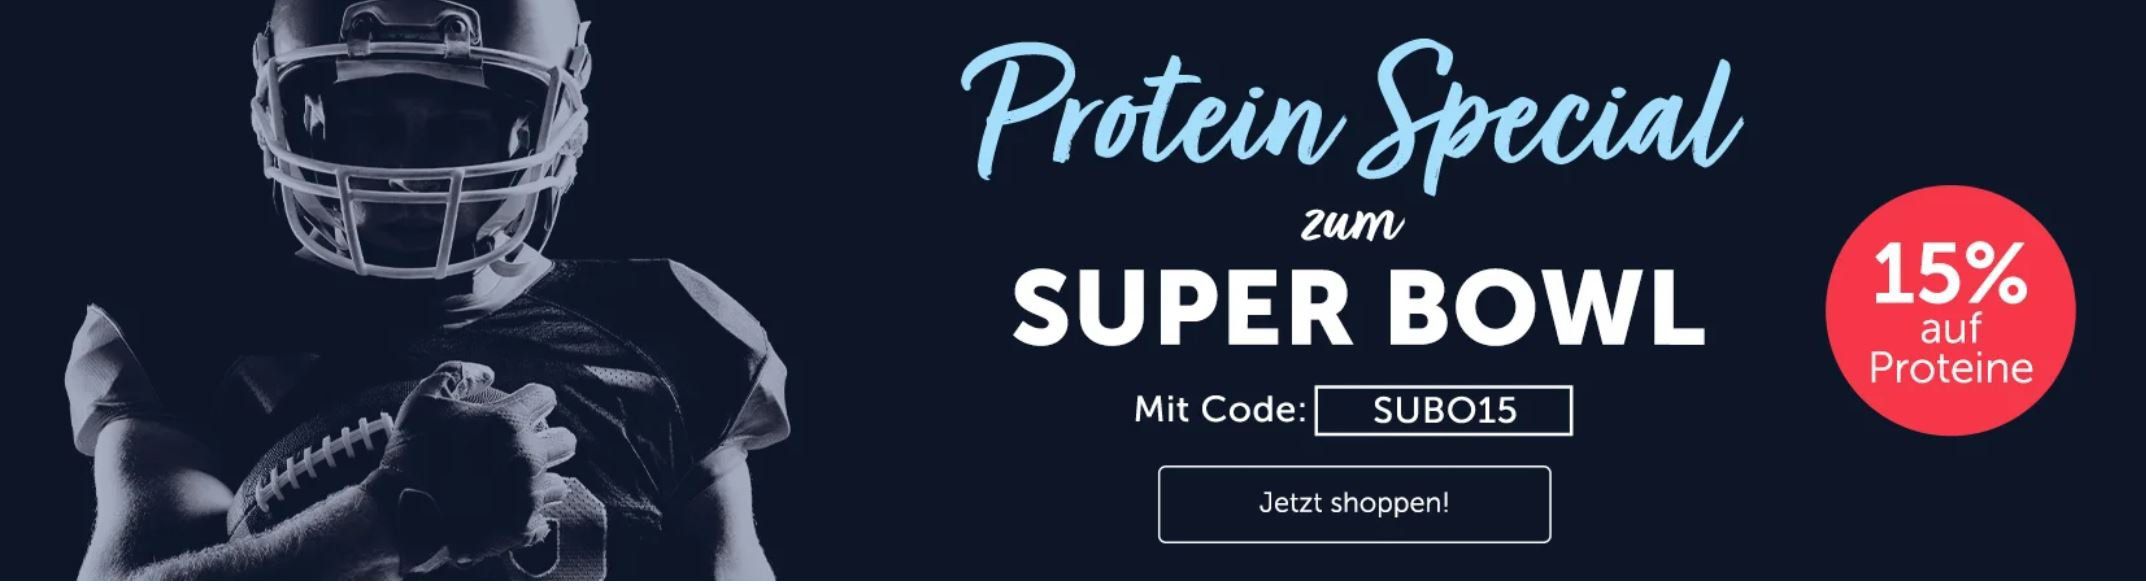 Vitafy 15% Super Bowl Rabatt auf Proteine!